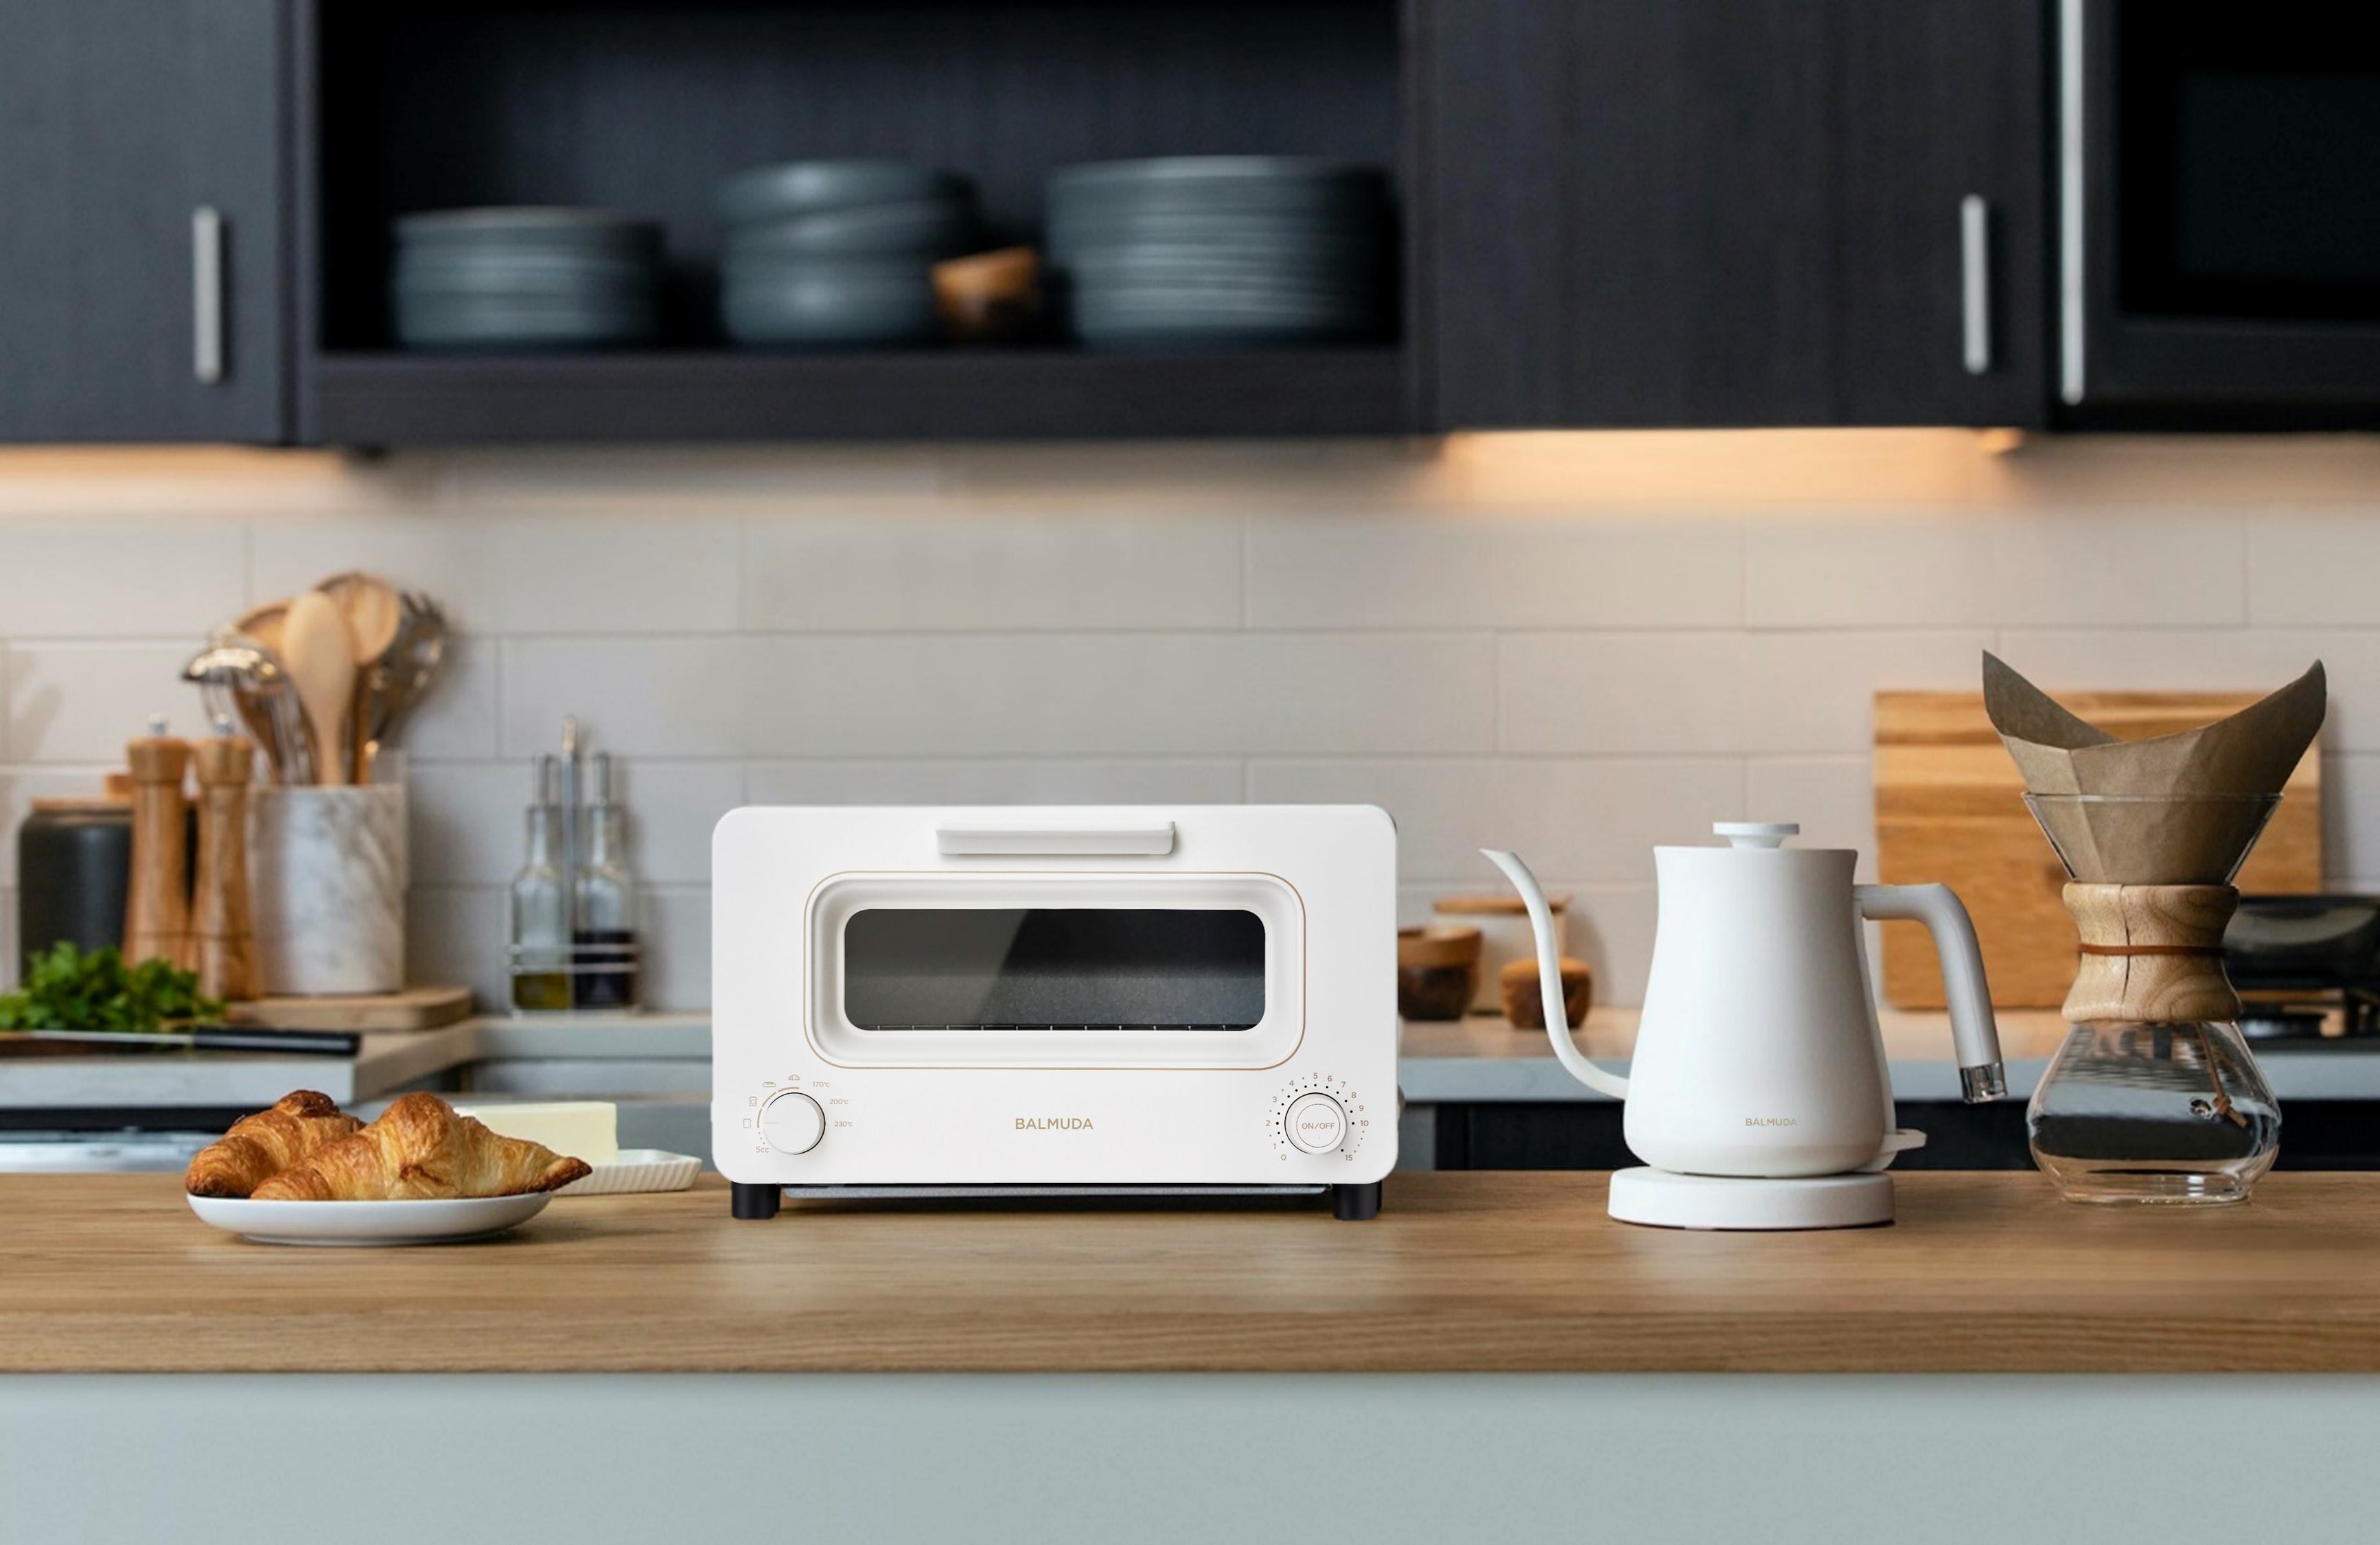 TikTok-Viral Japanese Appliance Brand Balmuda Opens First